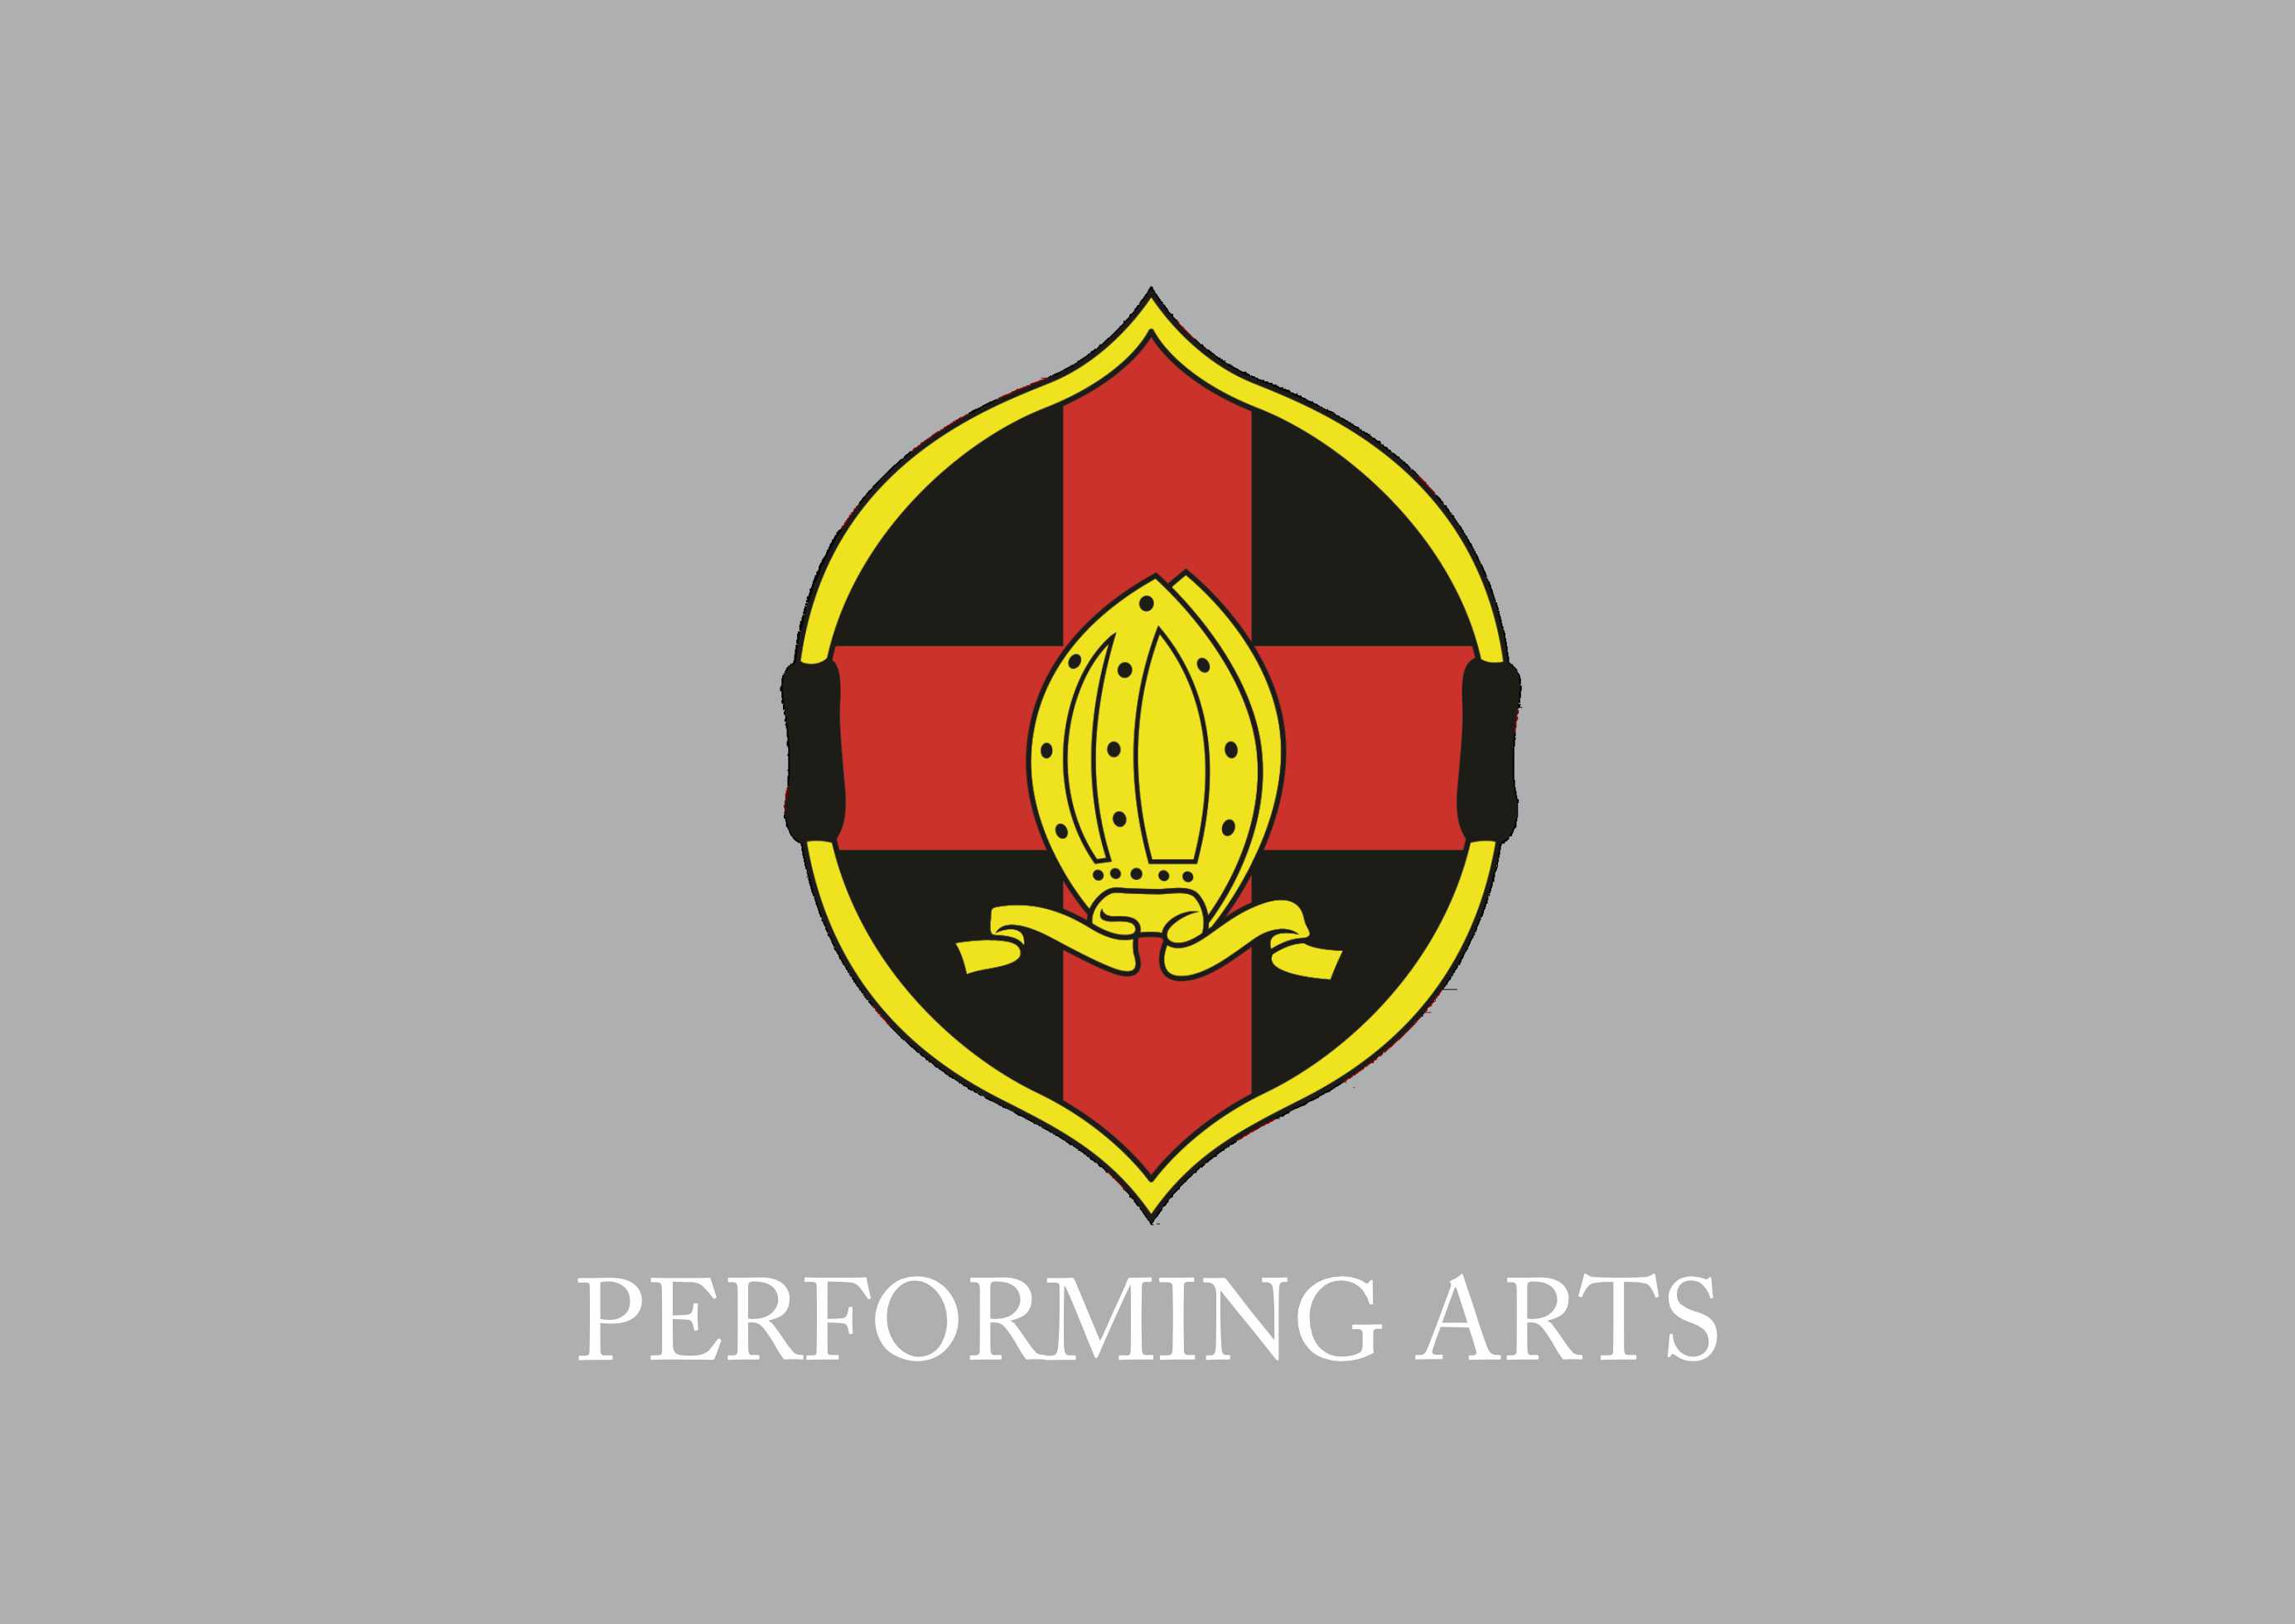 St Martins performing arts logo.jpg